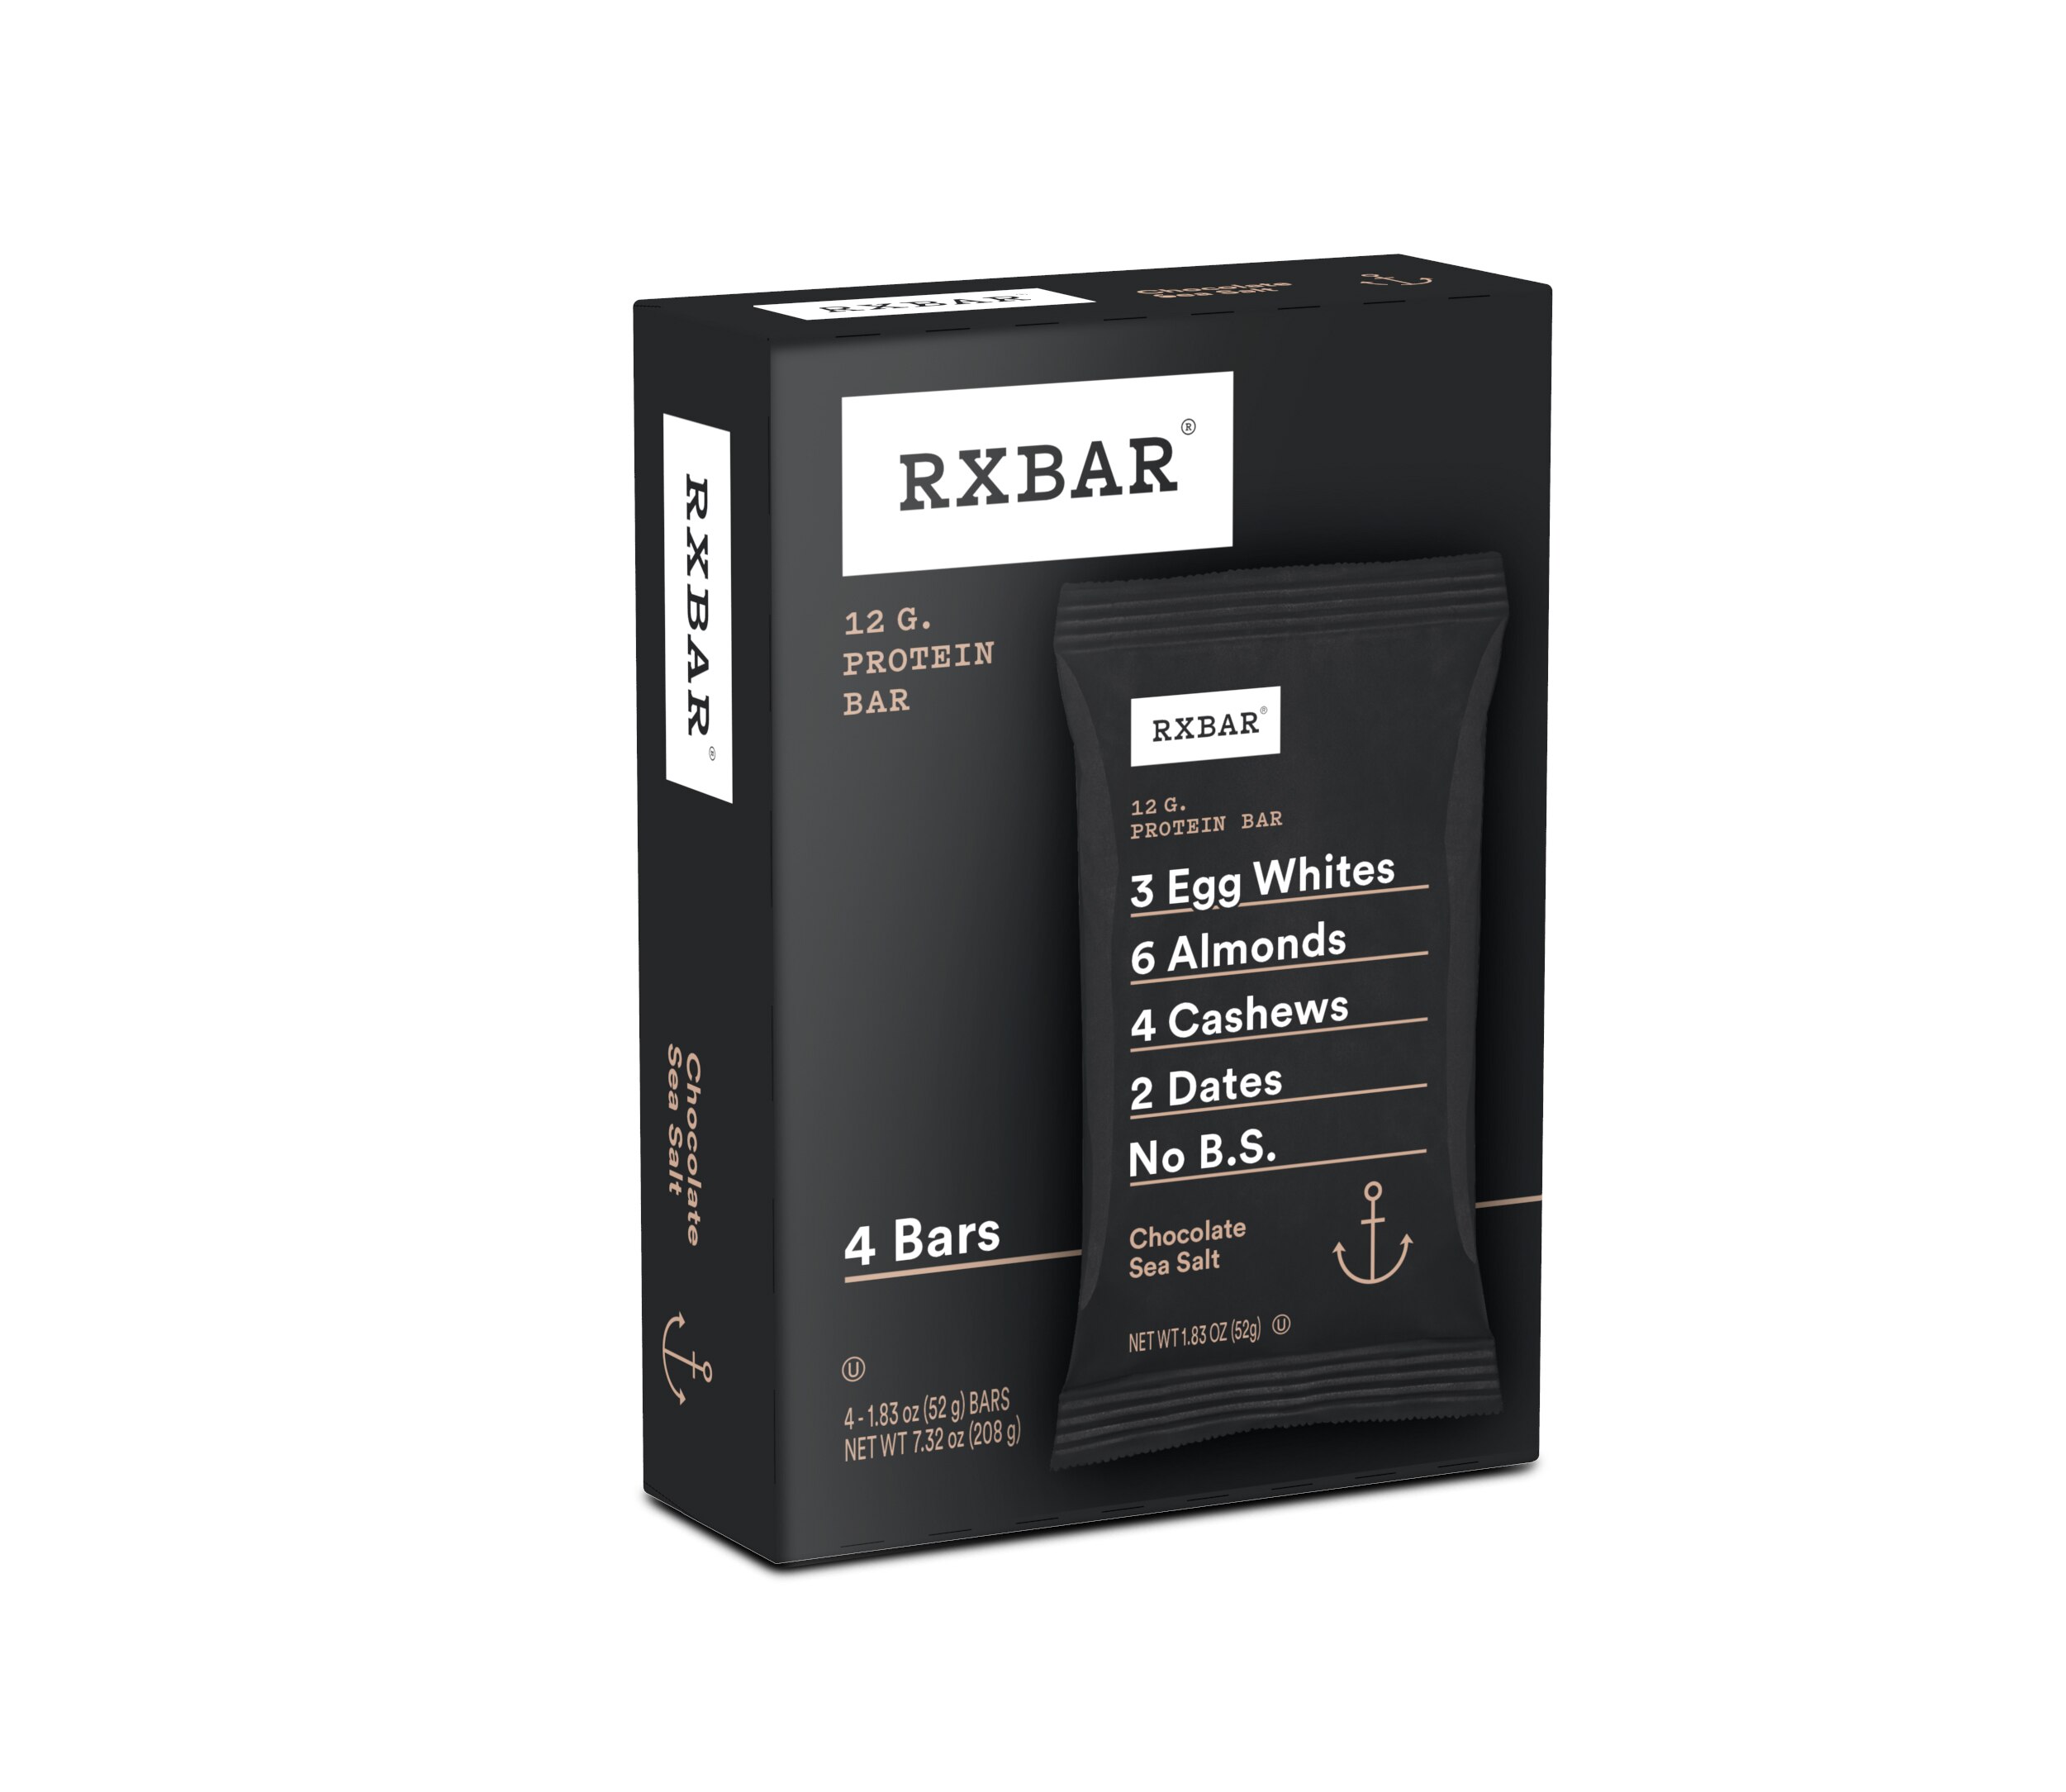 RXBAR Protein Bar, Chocolate Sea Salt